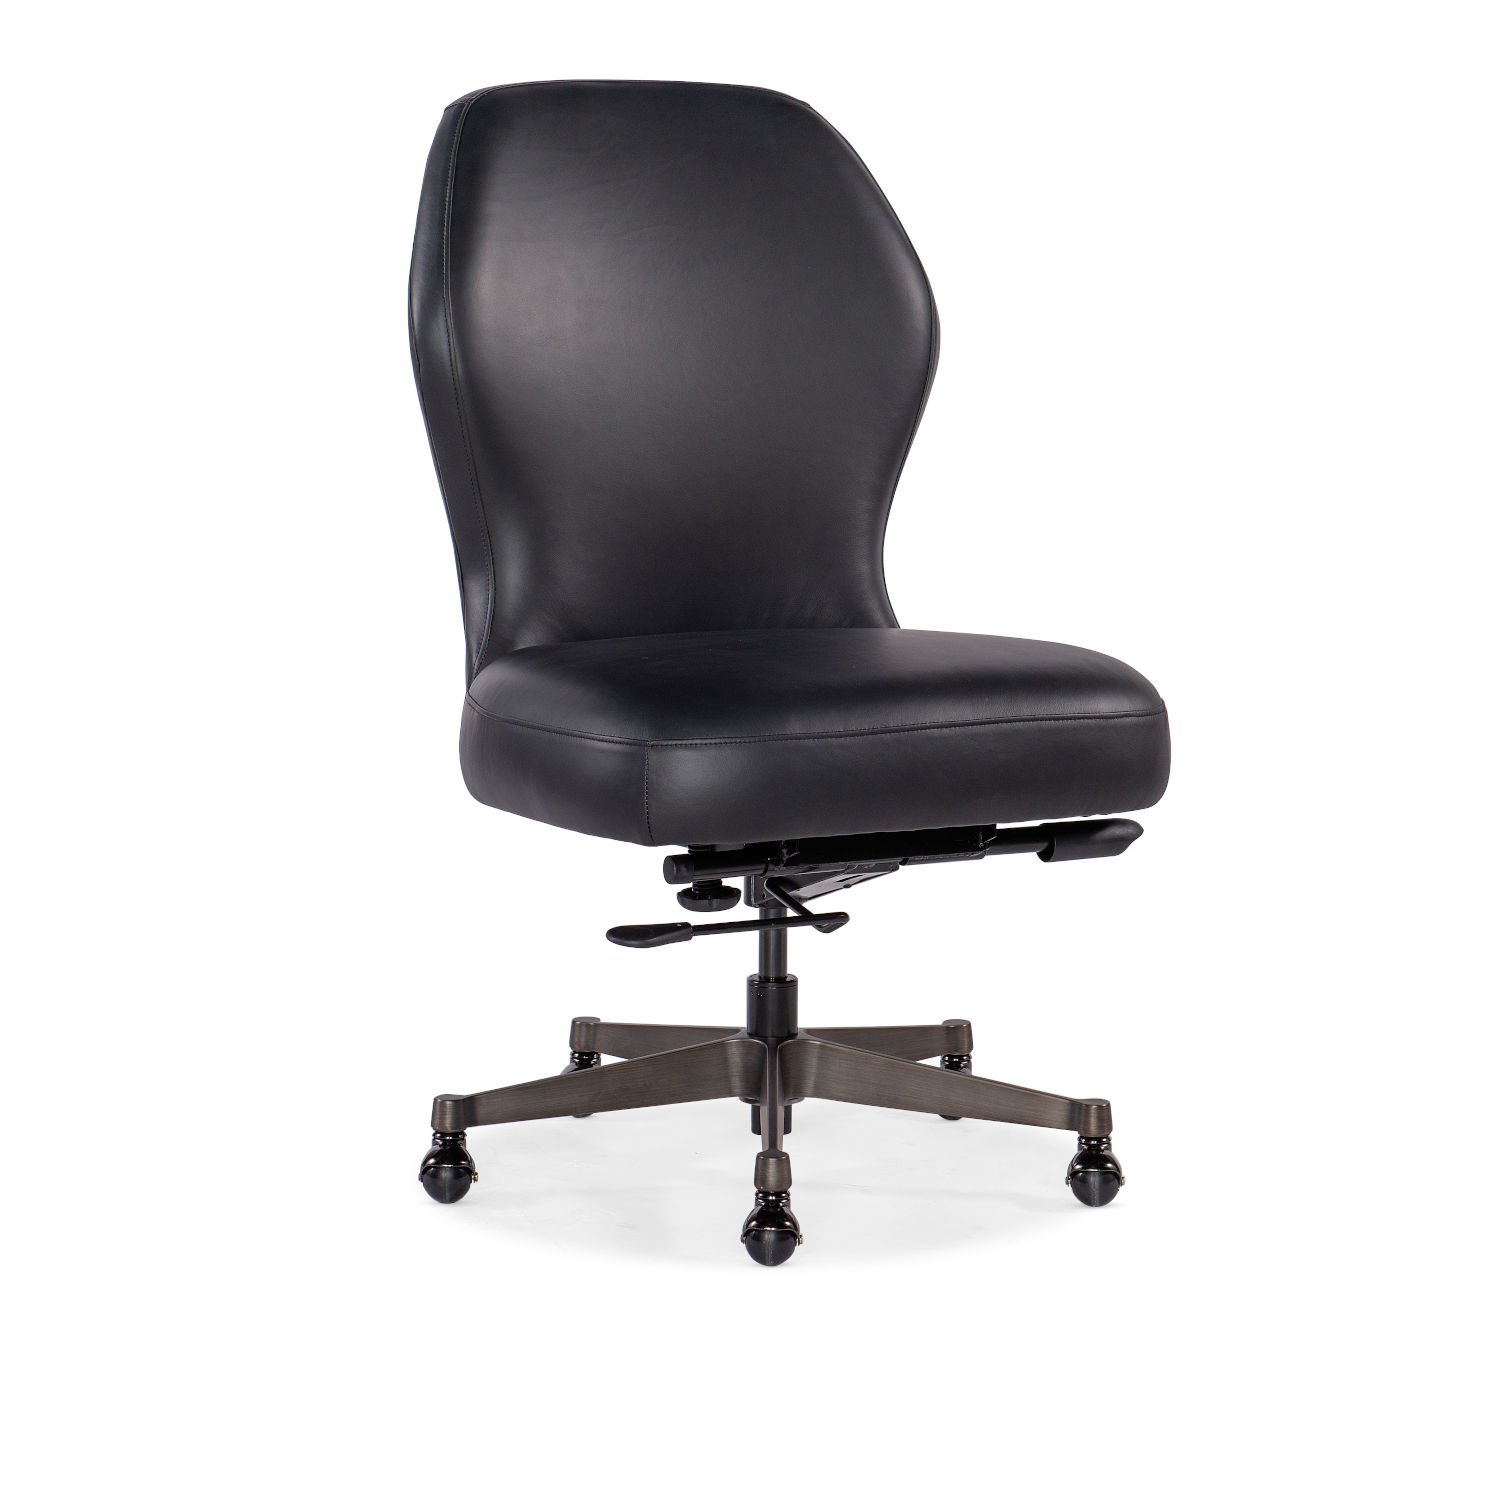 Hooker Furniture Black and Gunmetal Executive Swivel Tilt Chair